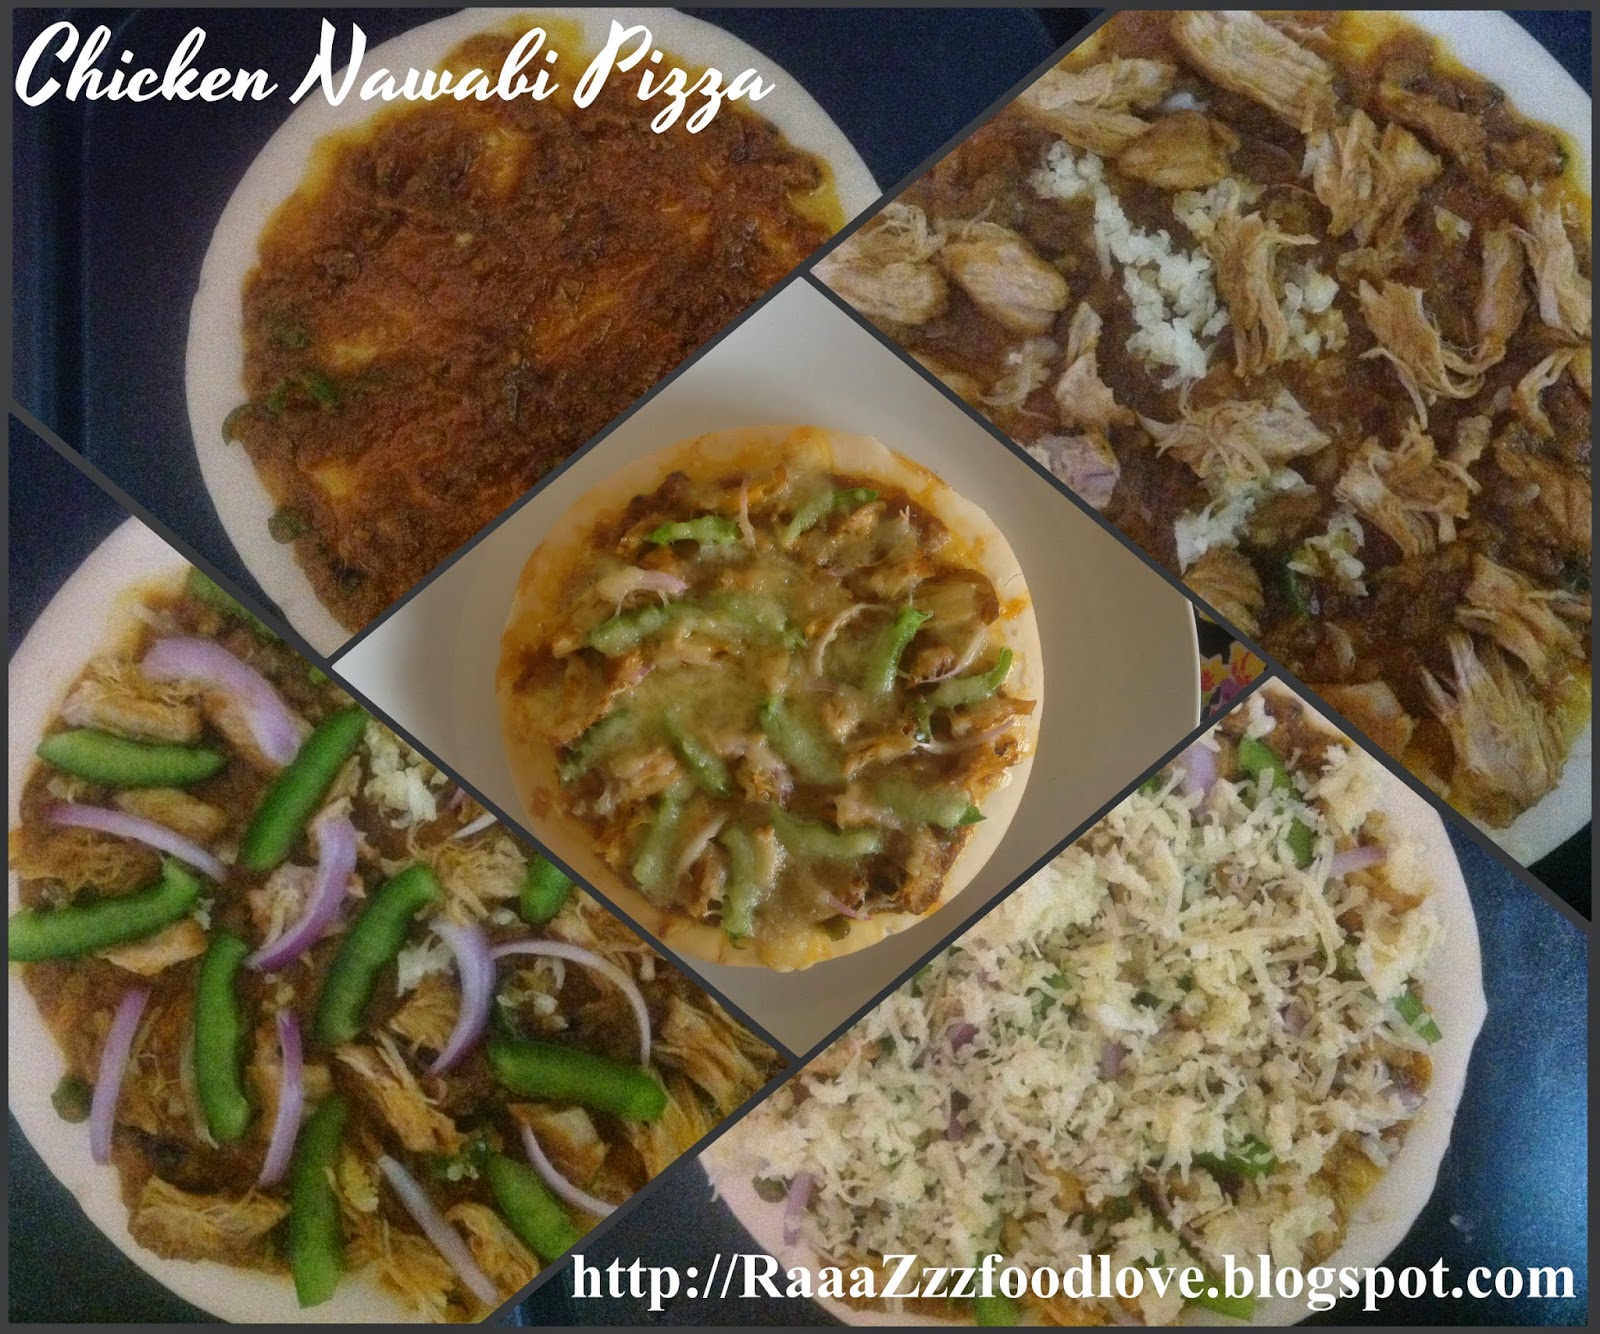 The Recipes of India: Chicken Nawabi Pizza